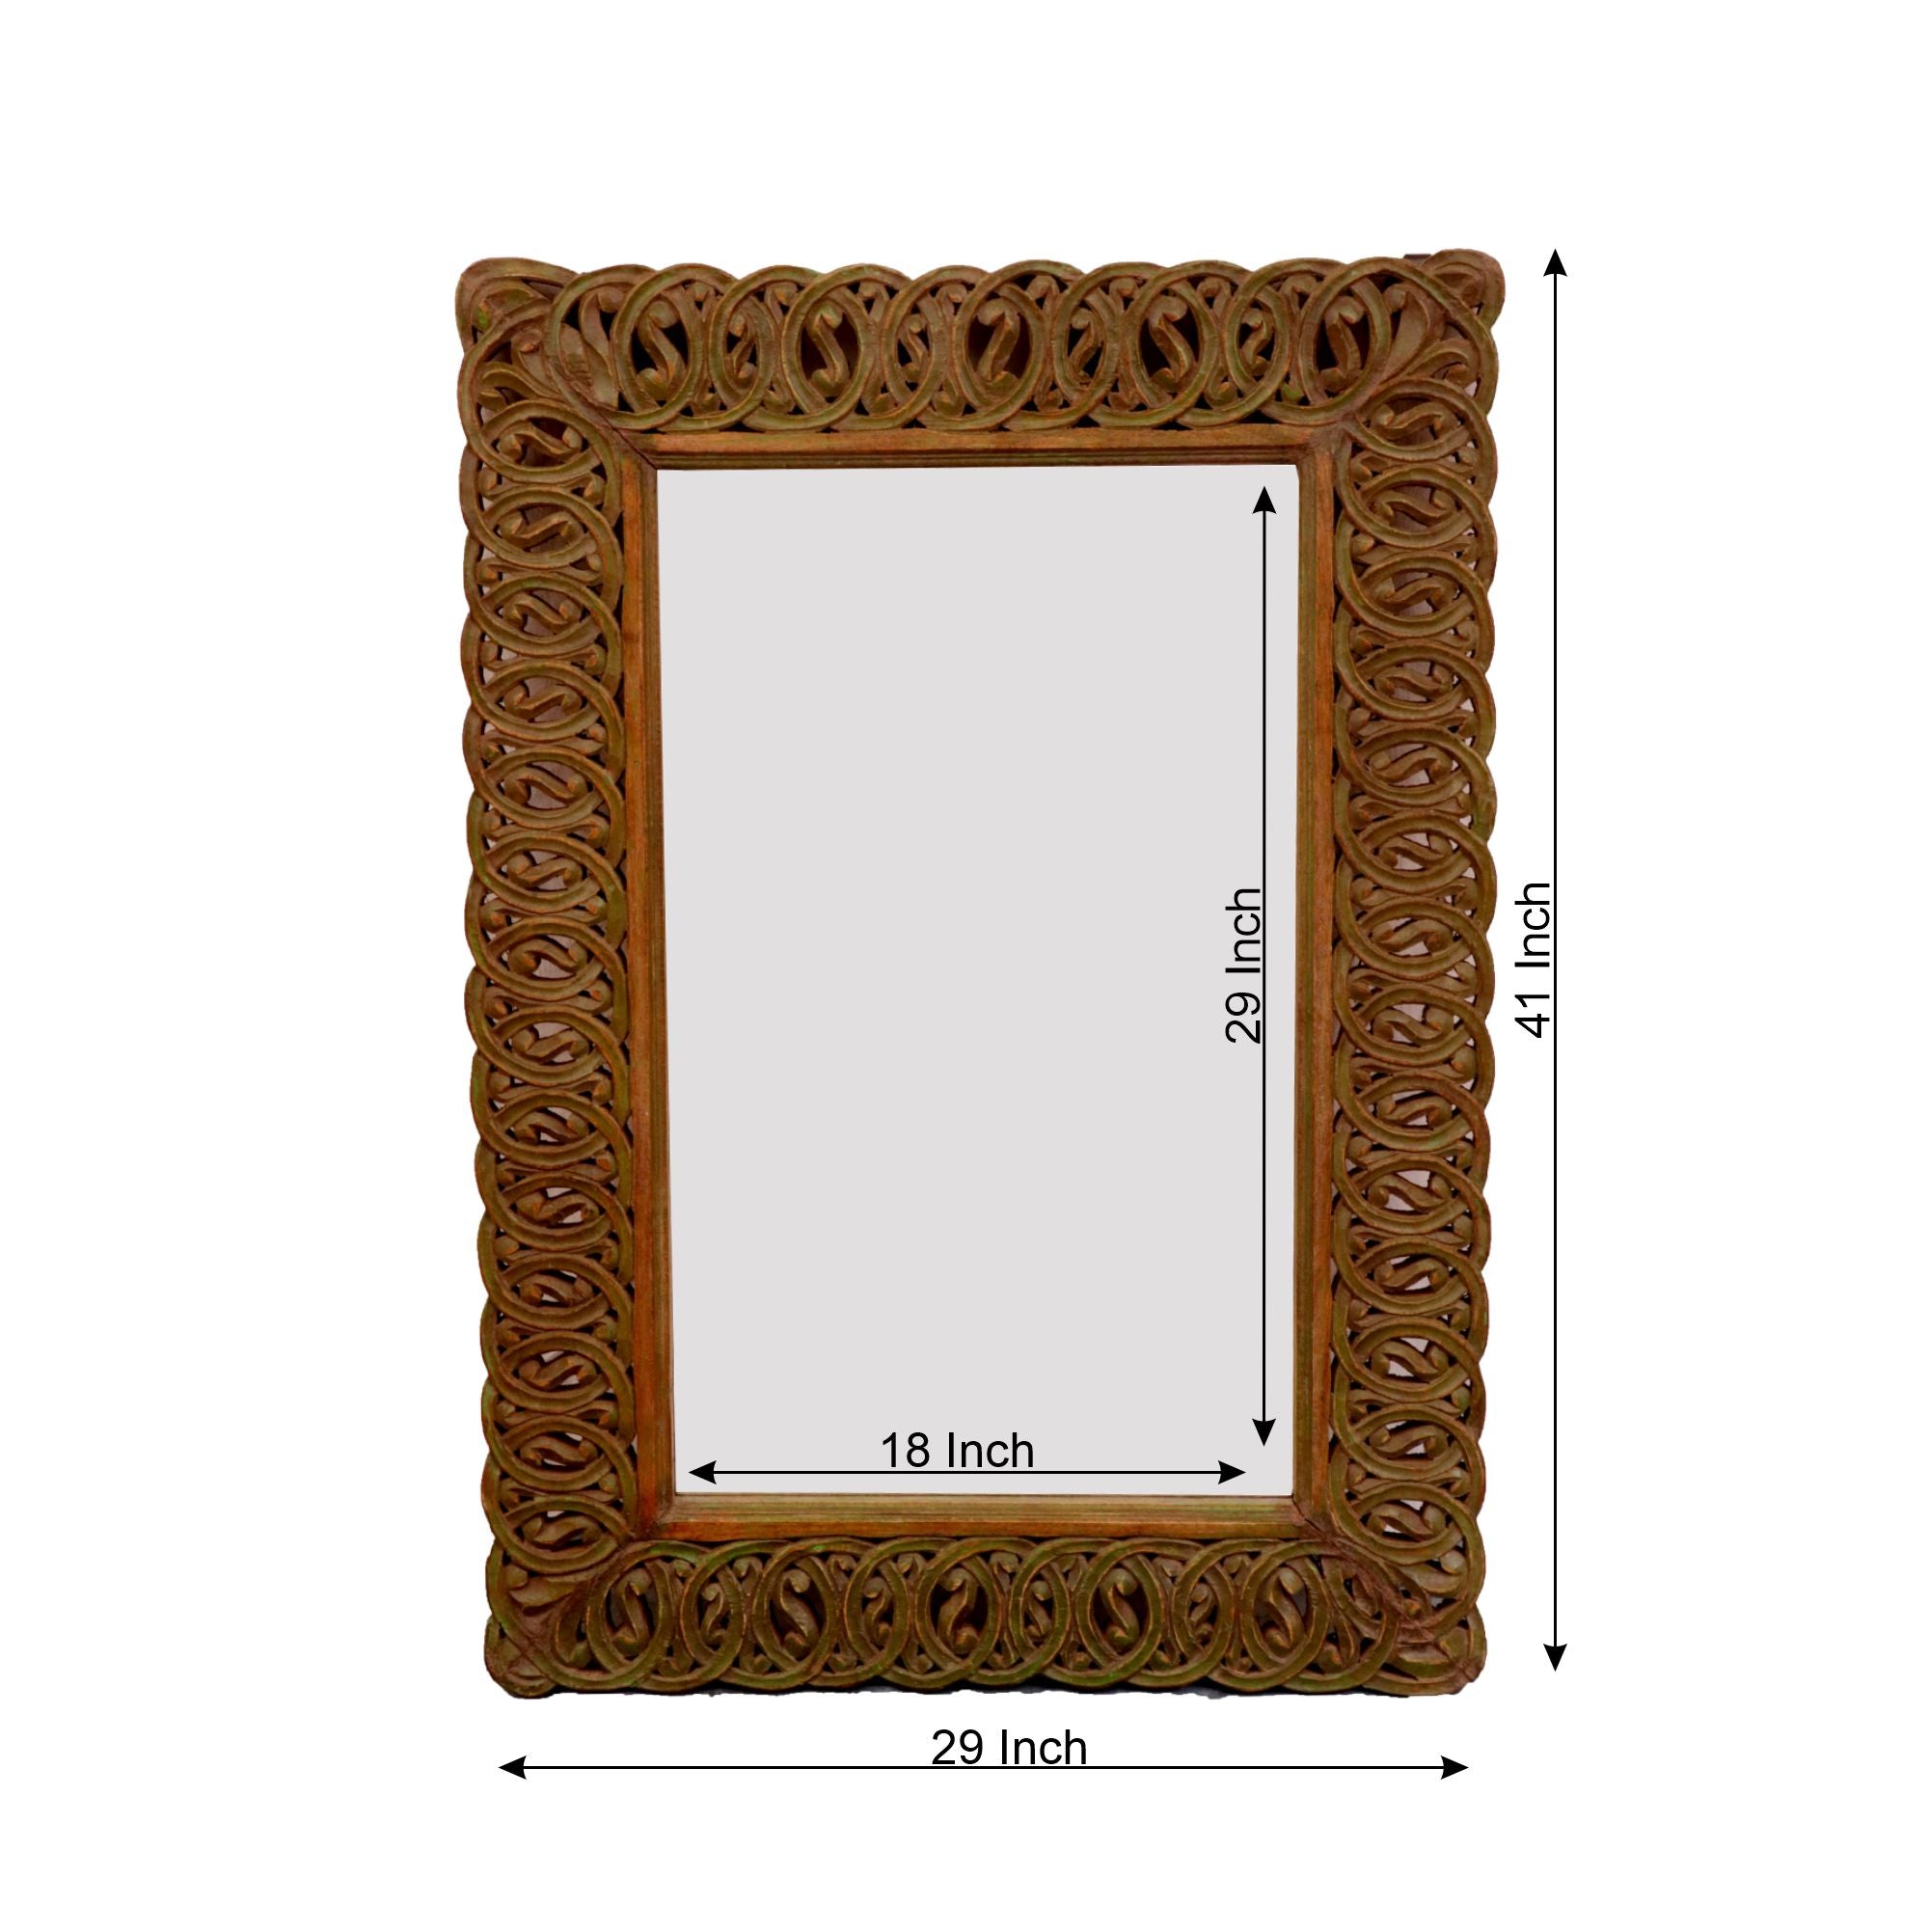 Solid Wood Royal Mirror Frame Mirror